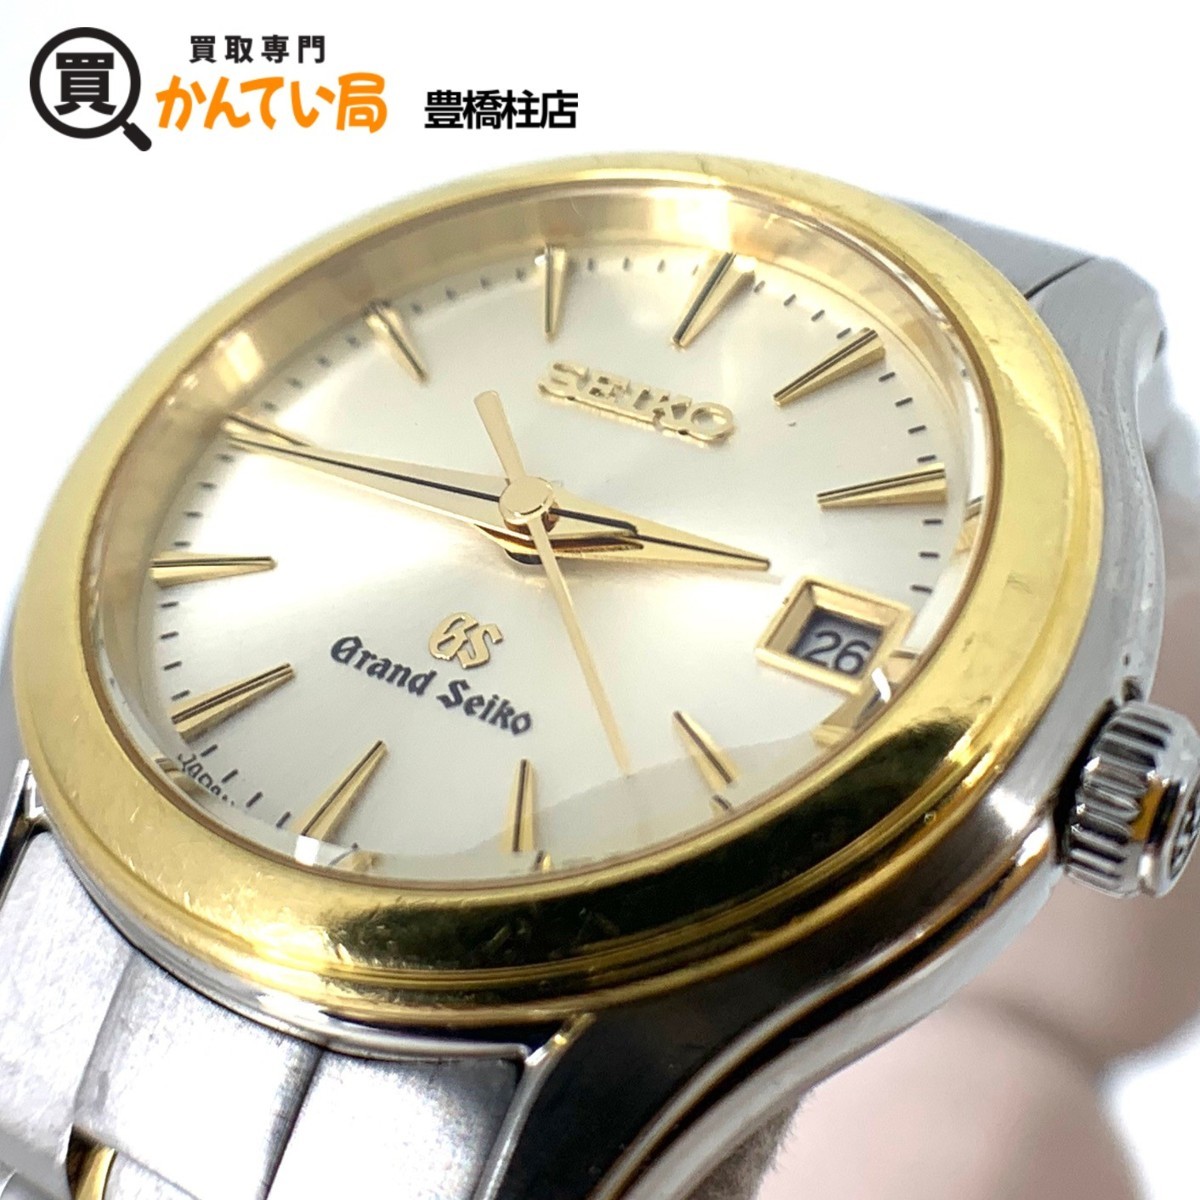 Grand Seiko グランドセイコー 腕時計 4J52-0A20 fkip.unmul.ac.id